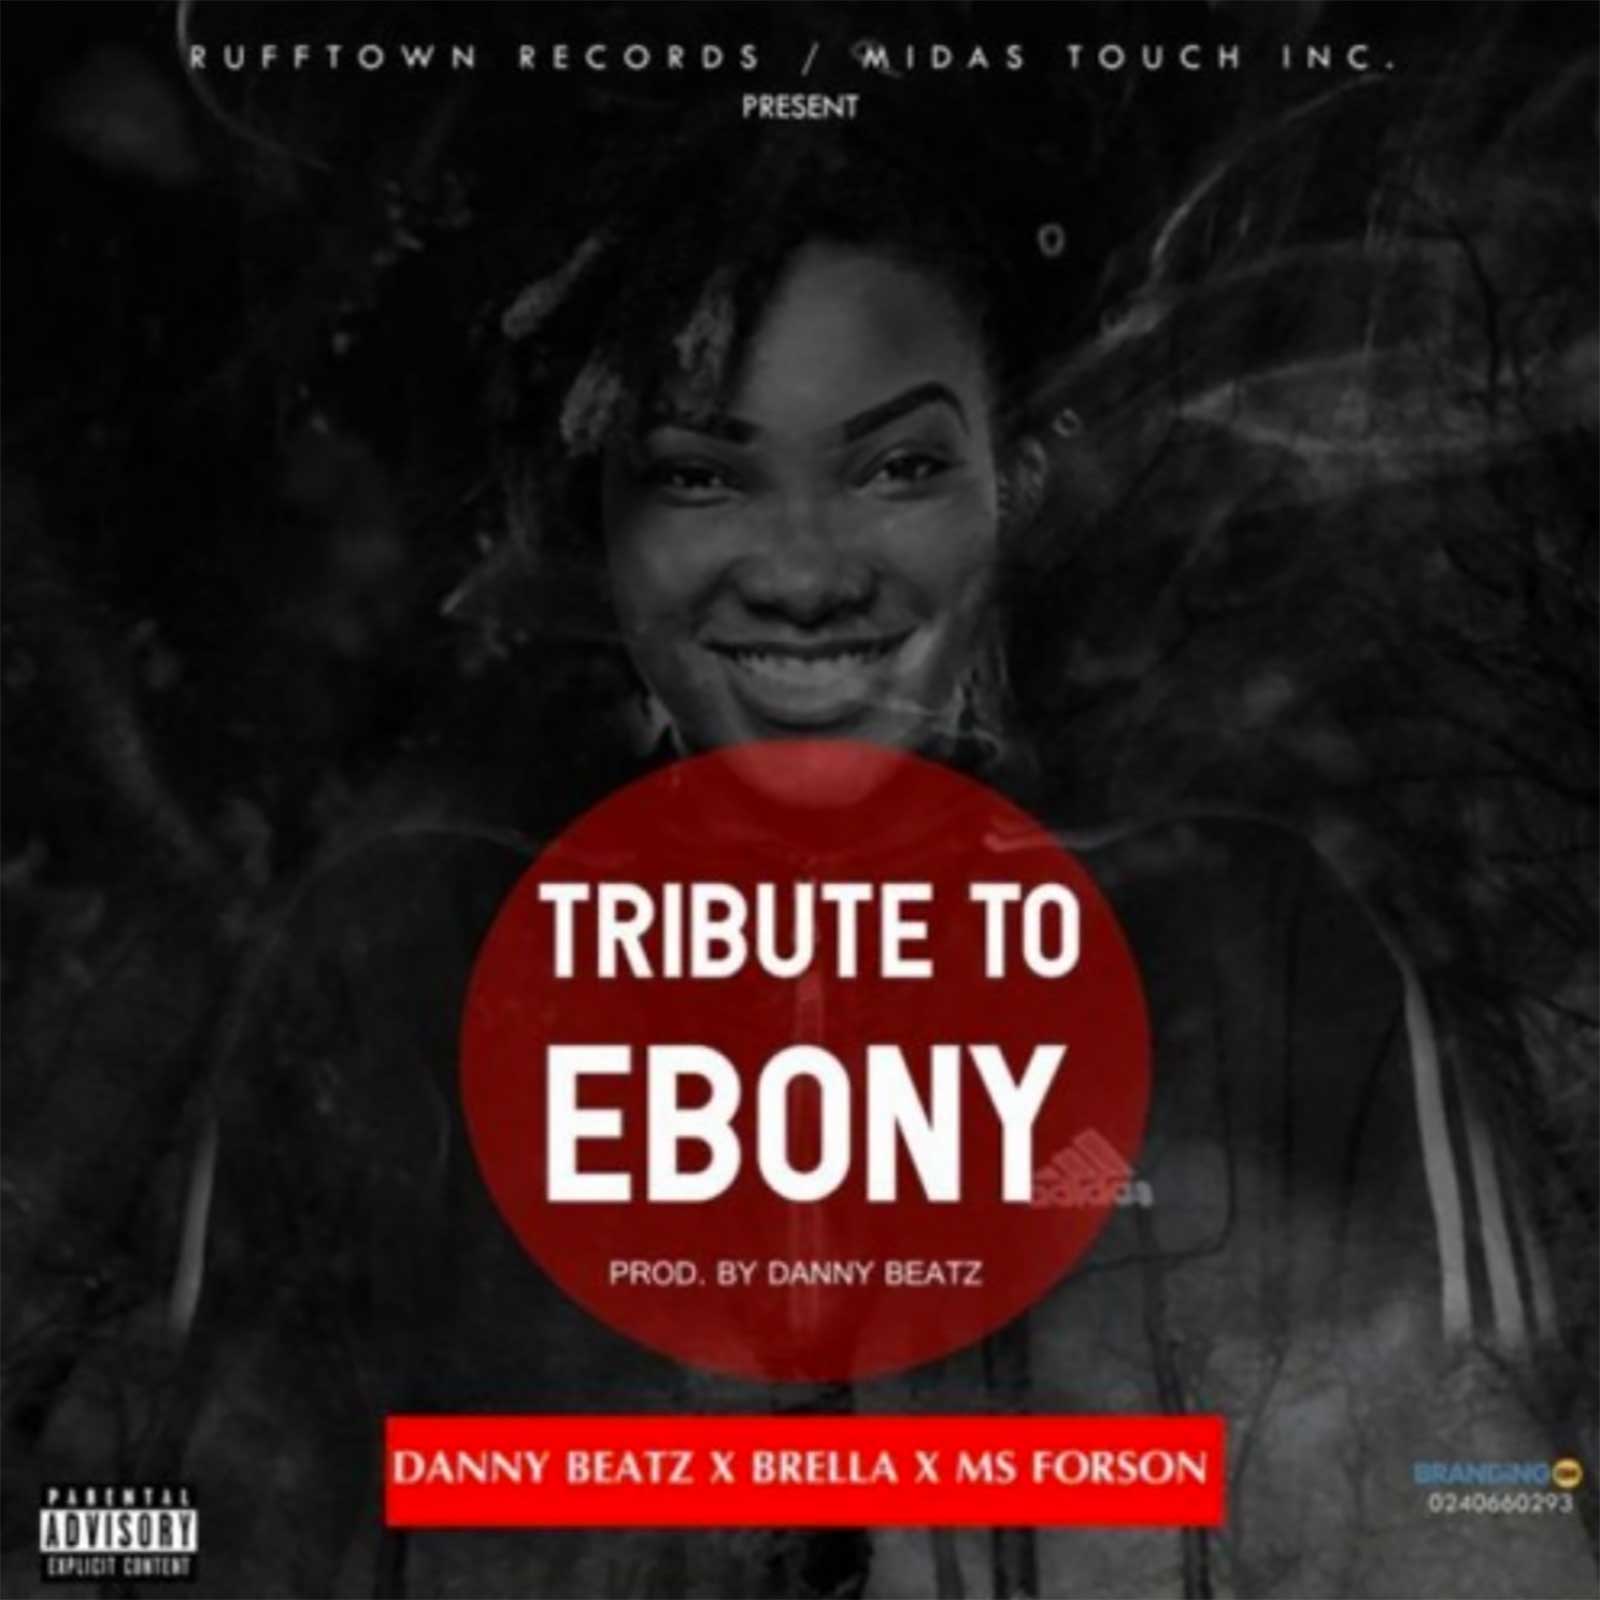 Tribute To Ebony Reigns by Danny Beatz, Brella & Ms Forson